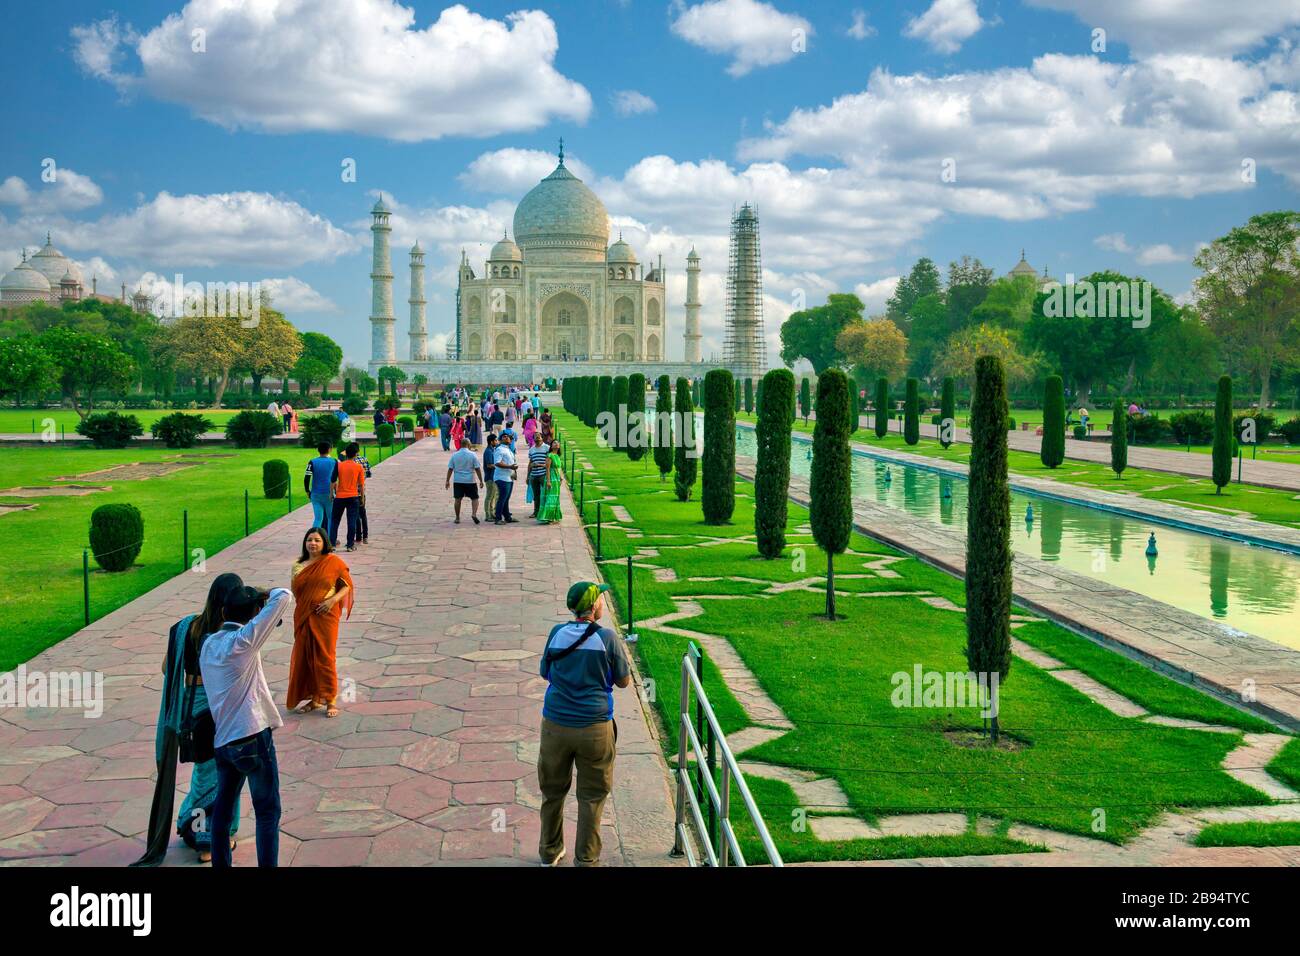 Taj Mahal in Agra, India Stock Photo